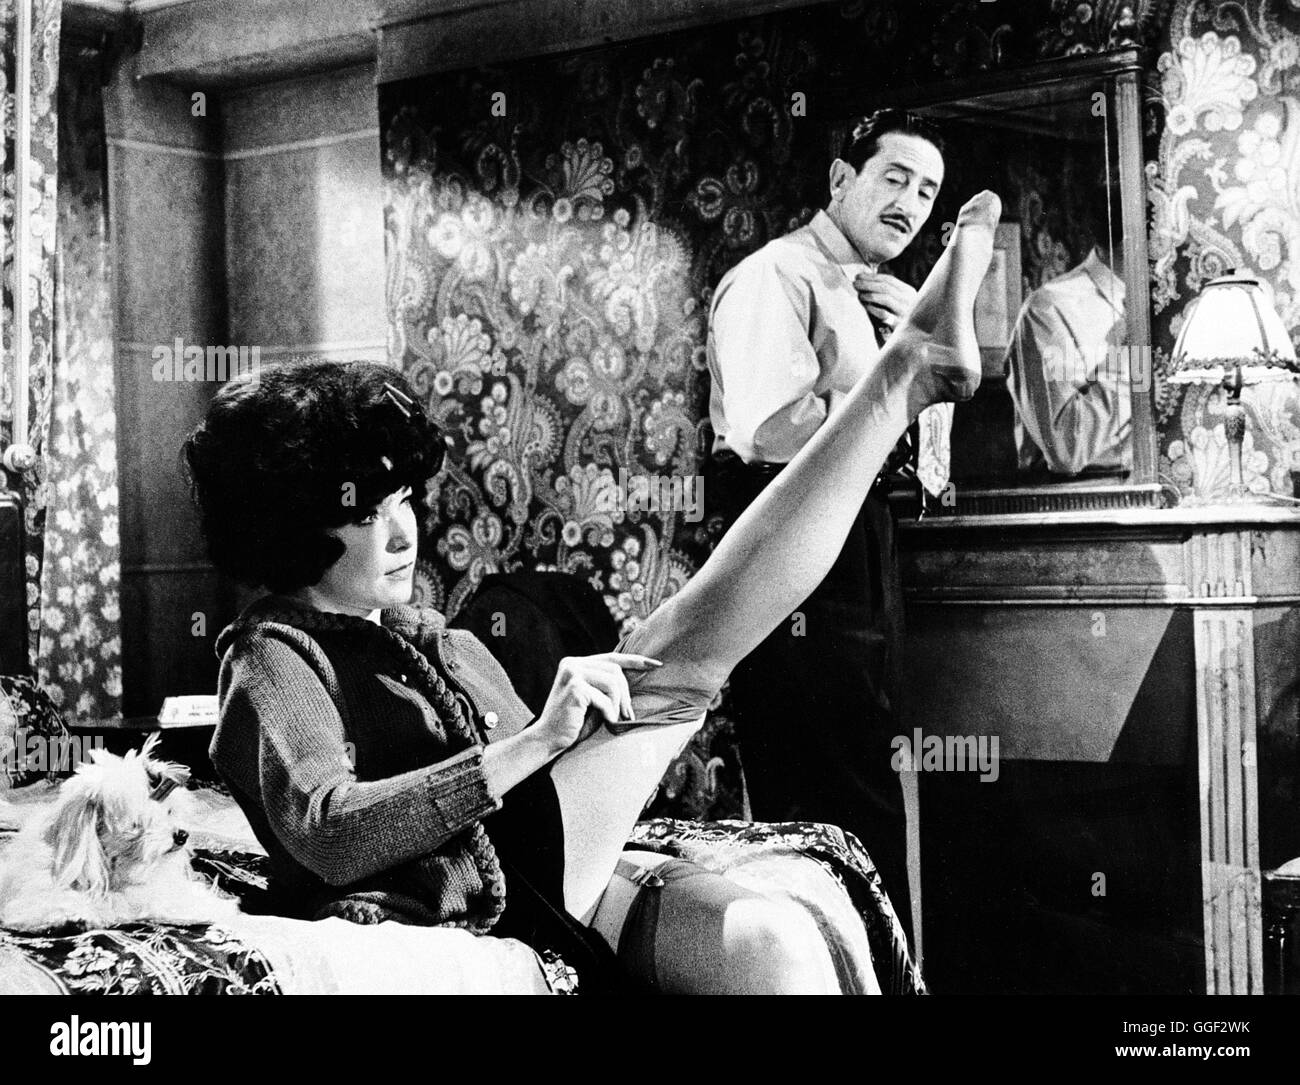 IRMA LA DOUCE / IRMA LA DOUCE / SHIRLEY MACLAINE beim Anziehen von Nylonstrümpfen in Billy Wilders Film: 'IRMA LA DOUCE', 1962. aka. Irma La Douce Foto Stock